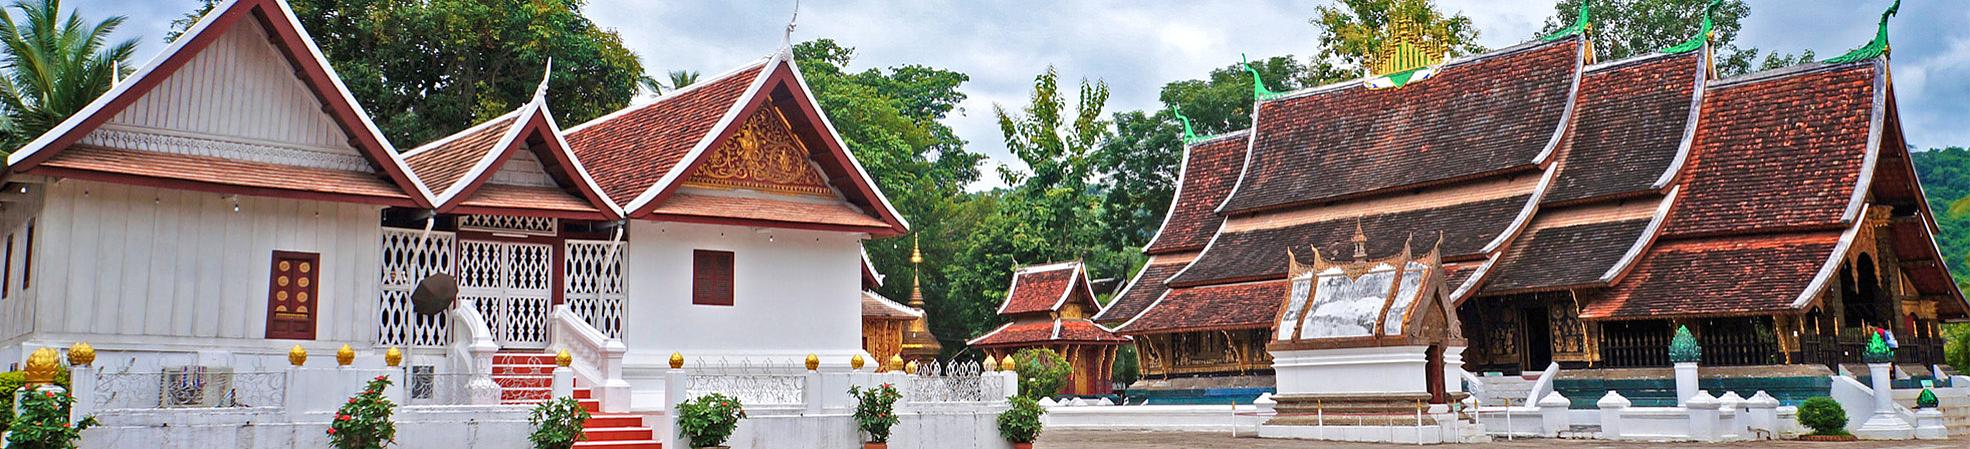 Laos Hotels & Accommodations